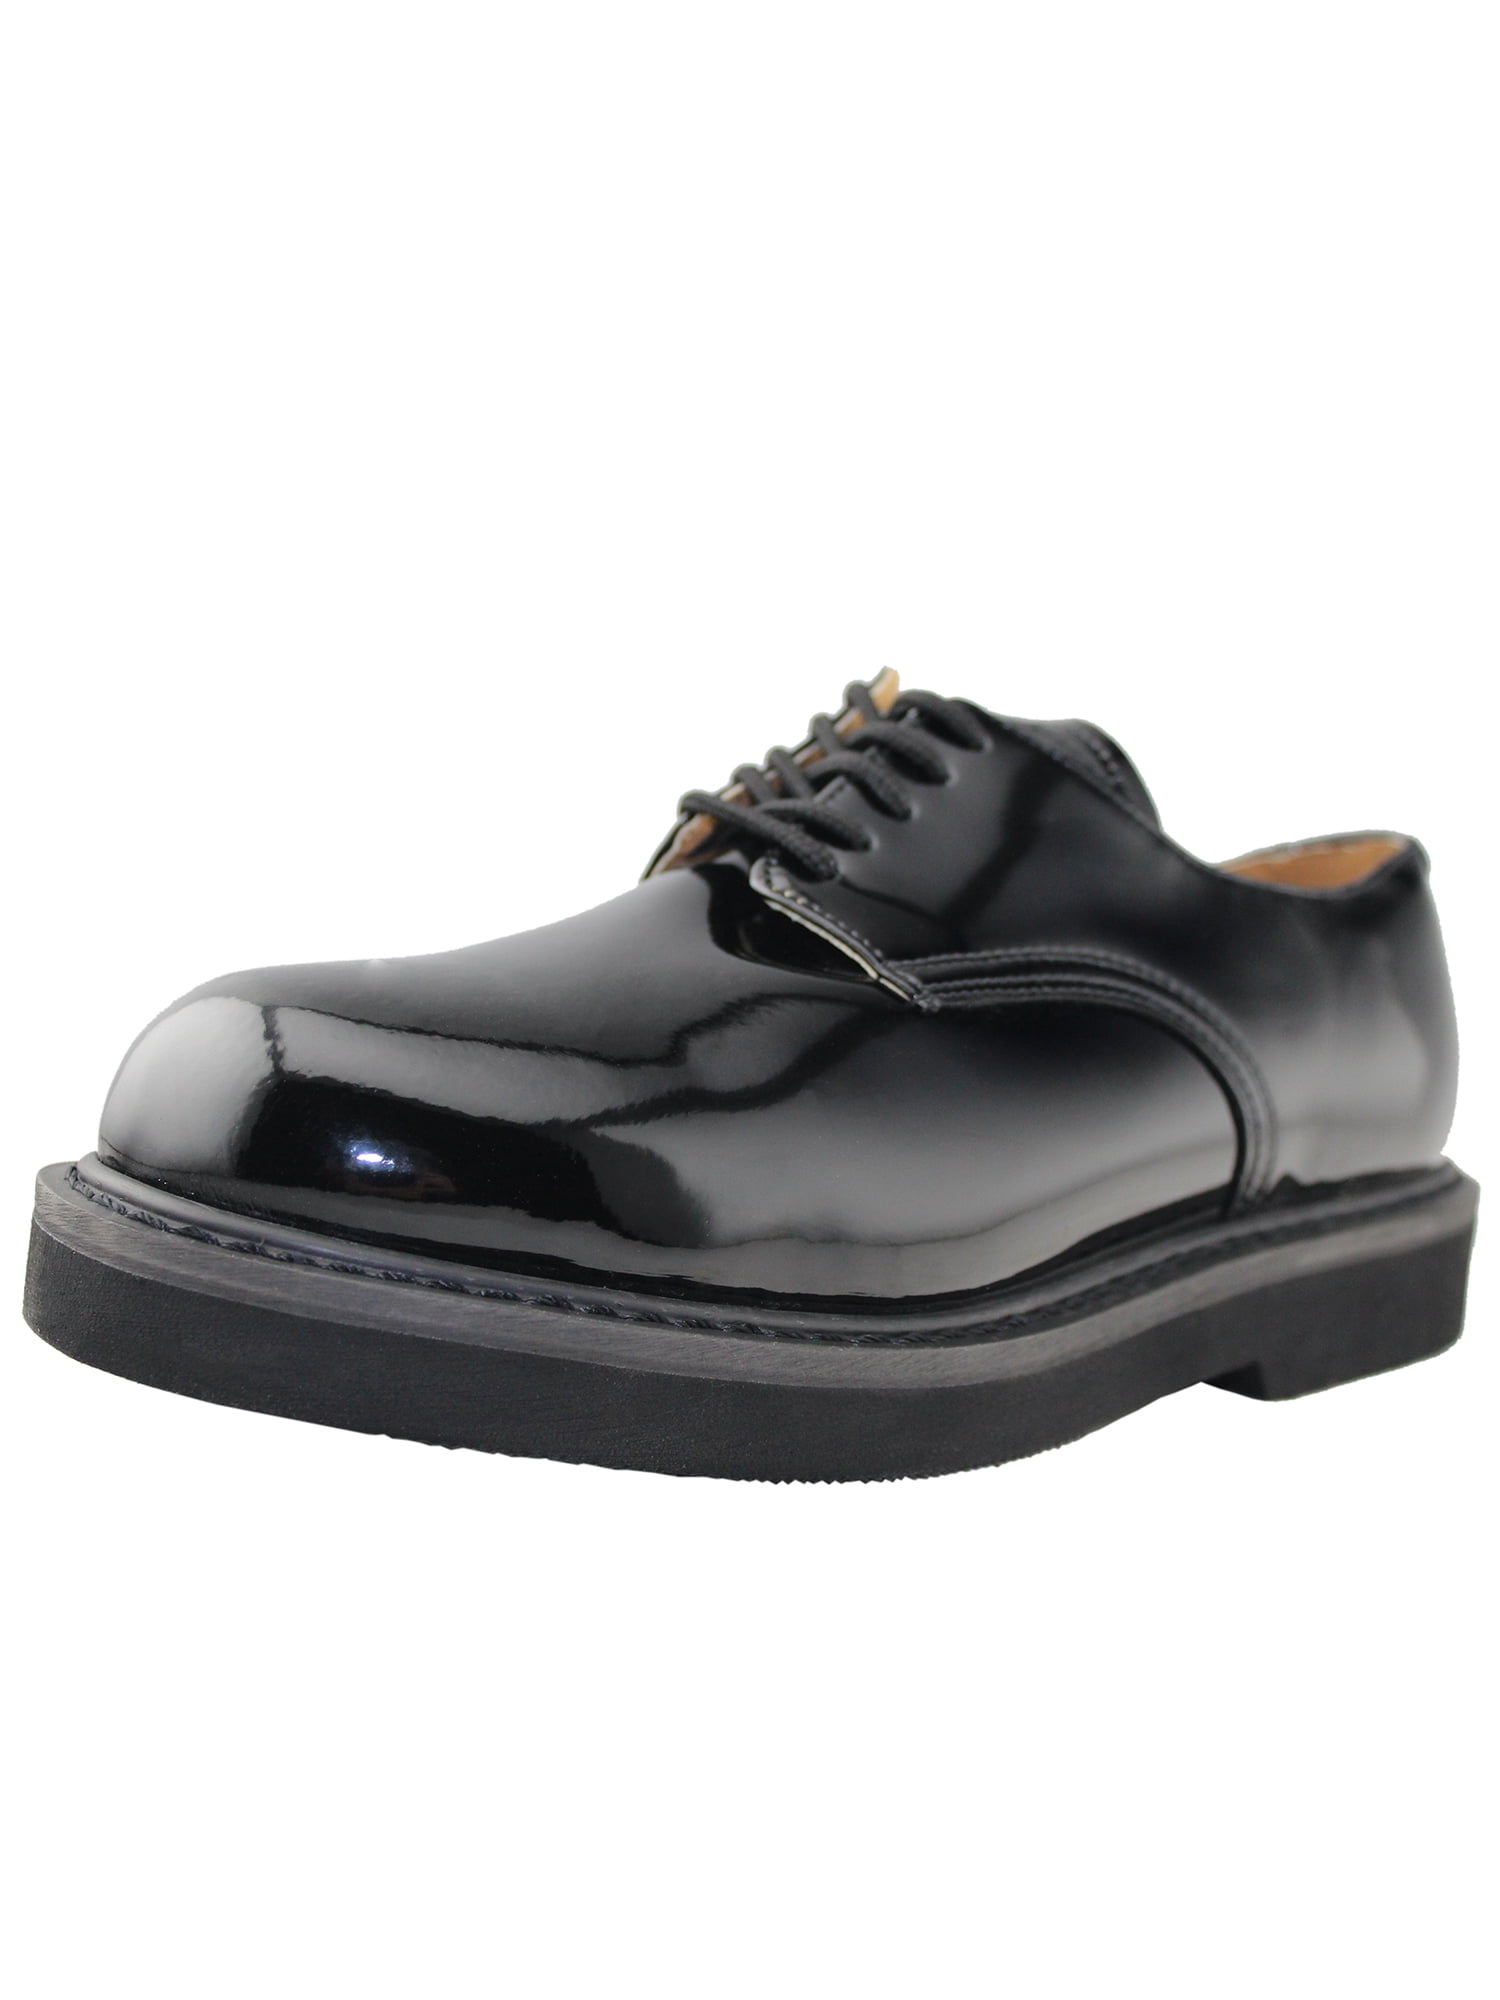 walmart black dress shoes